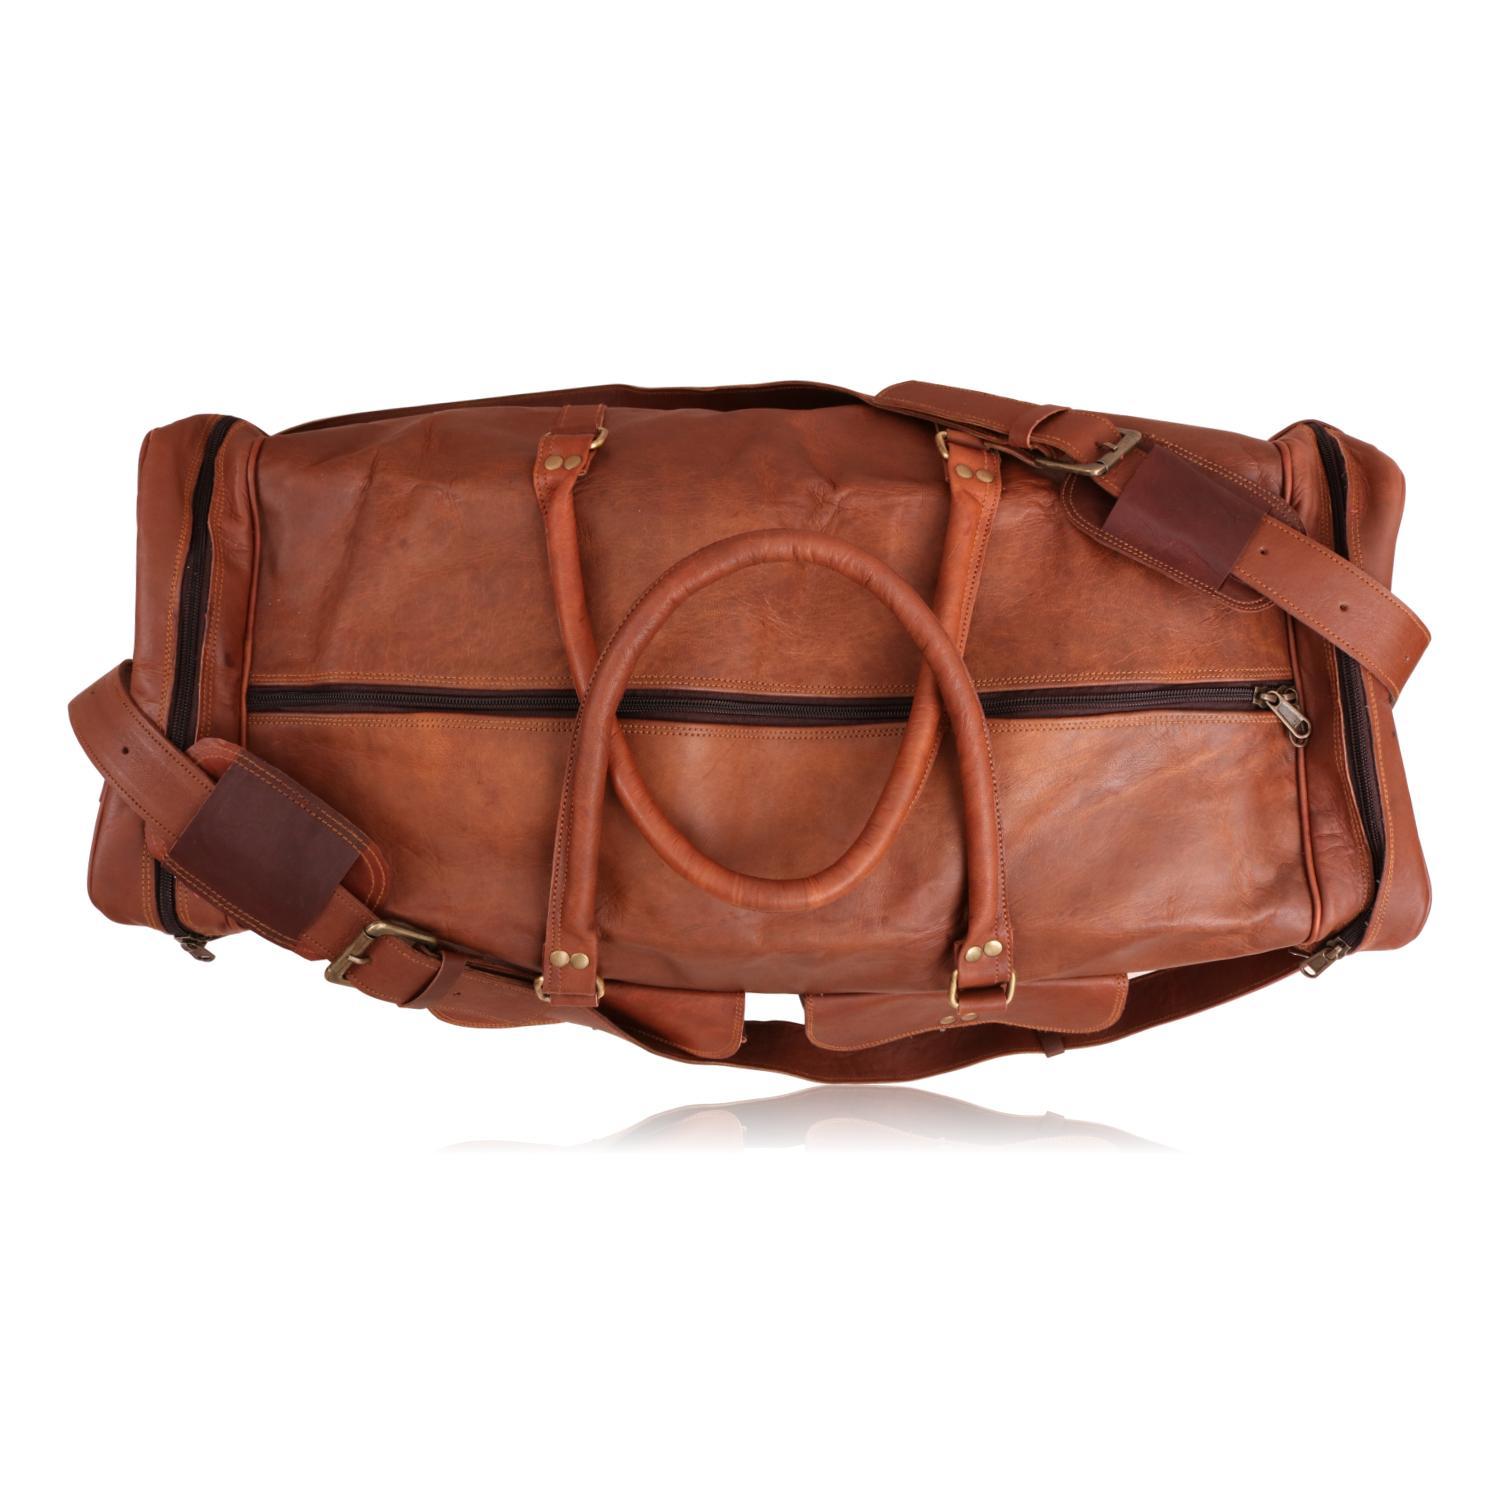 Best Leather Duffel Bag Large Size | www.bagssaleusa.com